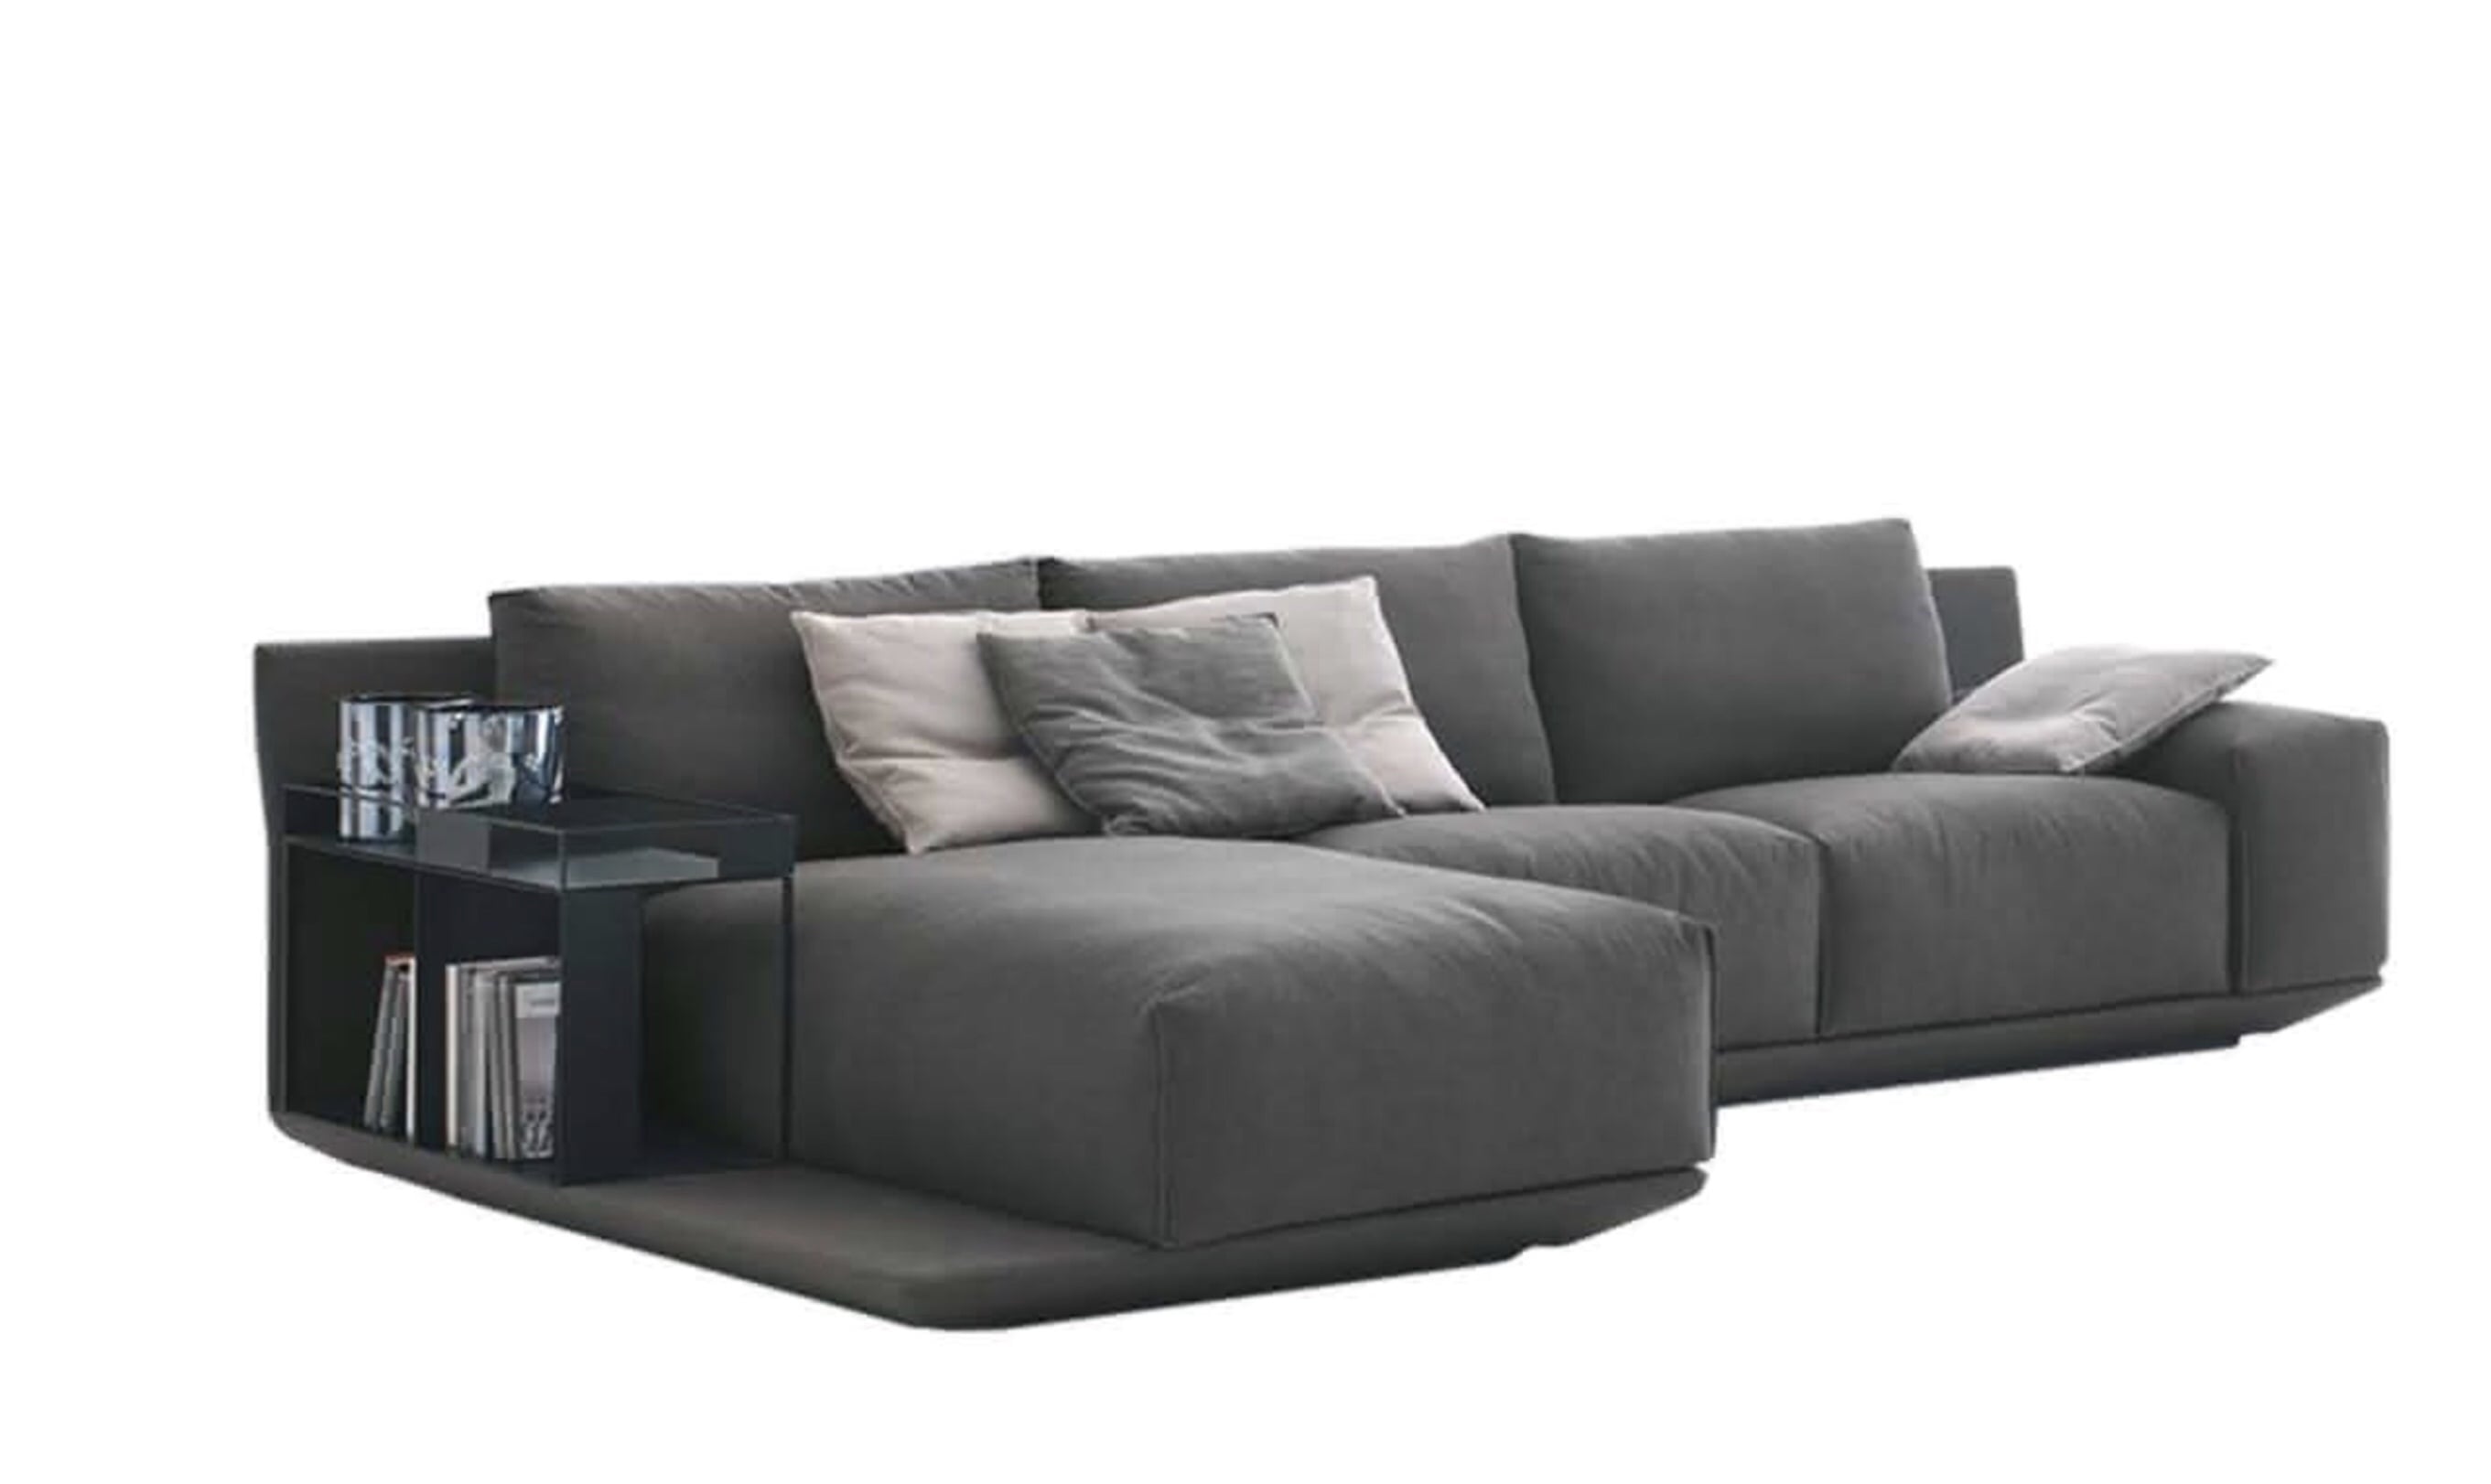 Made to Order Furniture. - Sofa 005-01